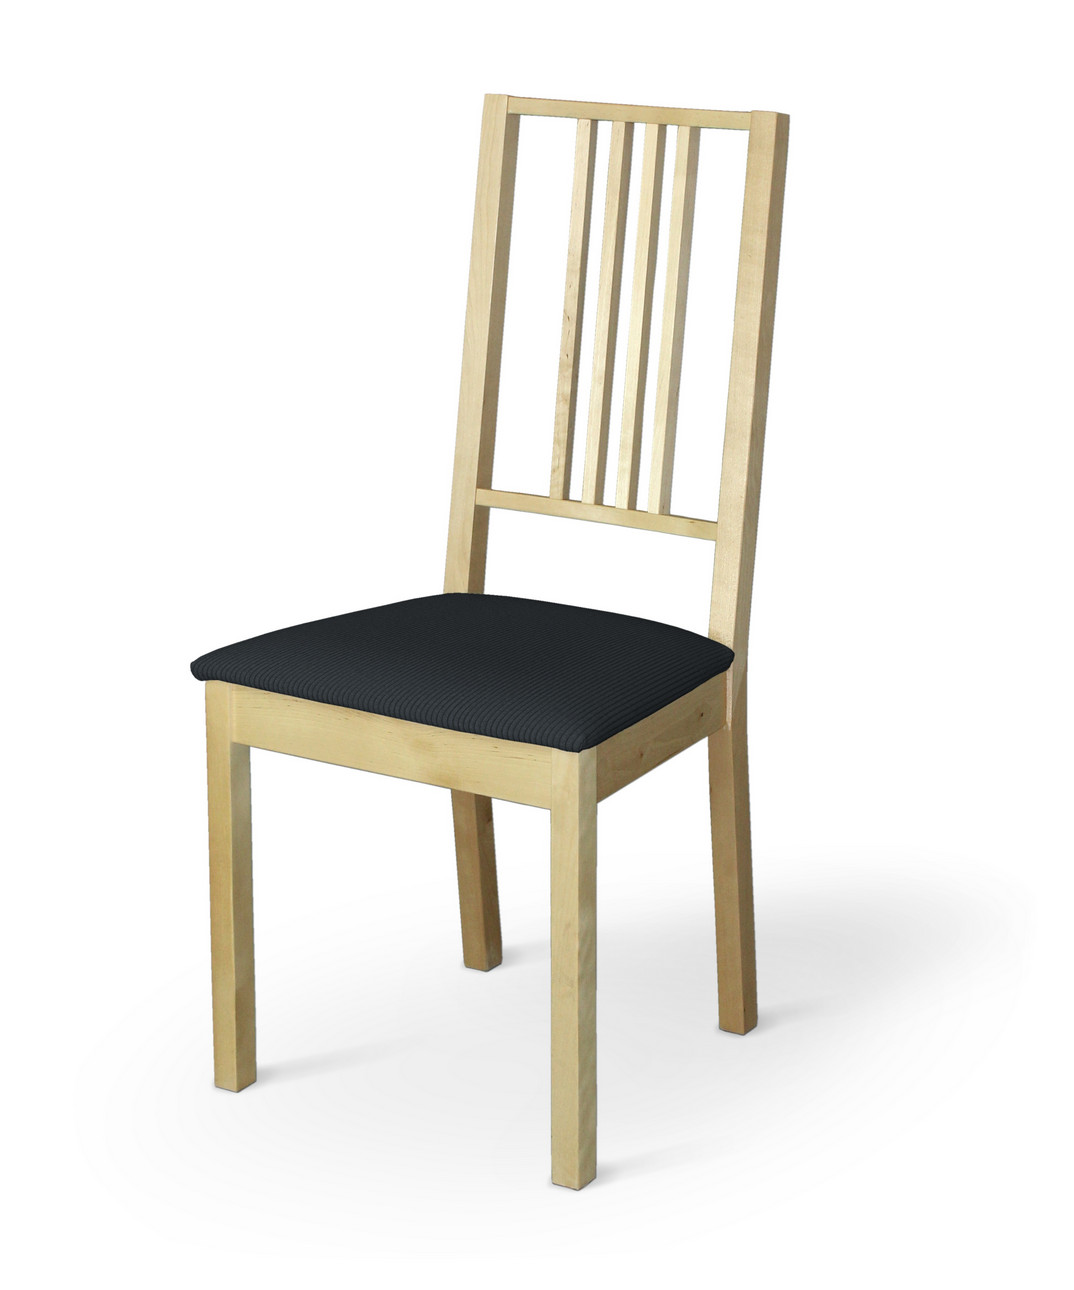 Dekoria Potah na sedák židle Börje, antracitová, potah sedák židle Börje, Manchester, 701-38